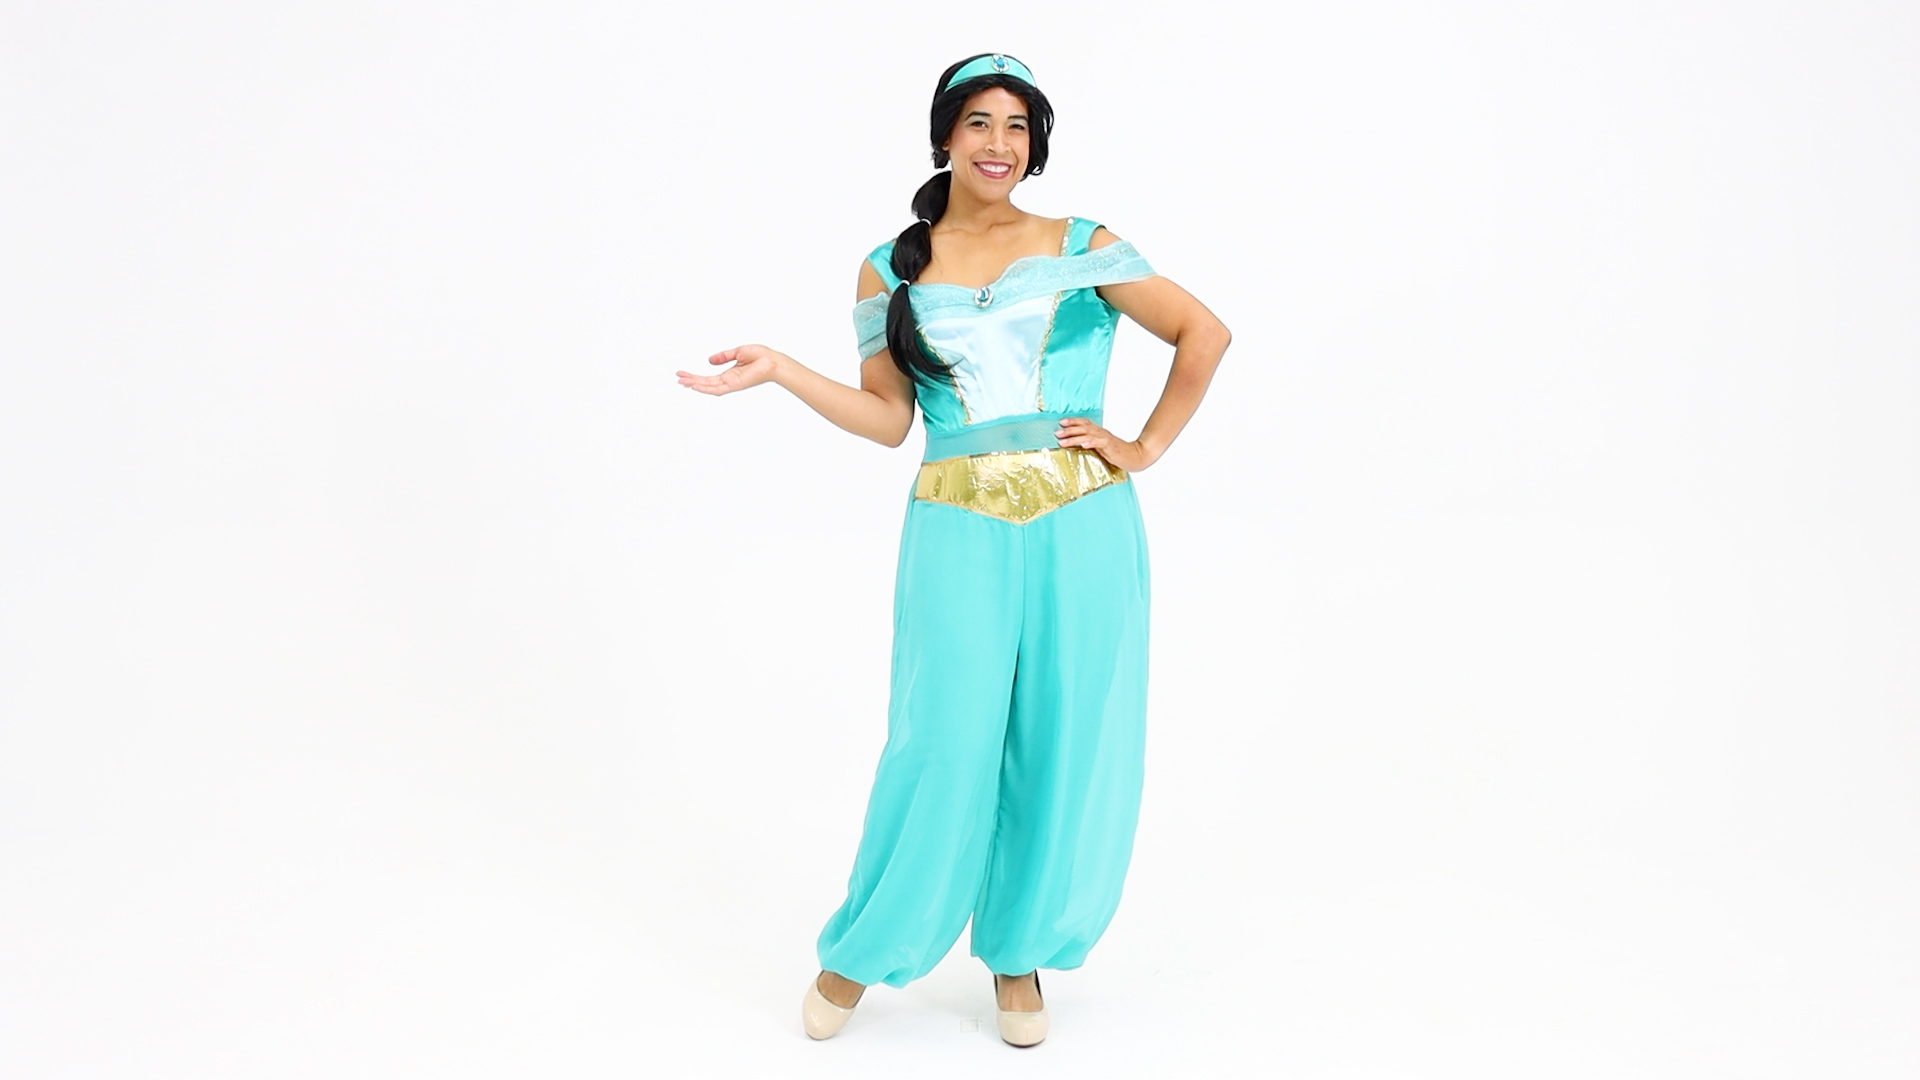 Disney Aladdin Deluxe Jasmine Women's Costume